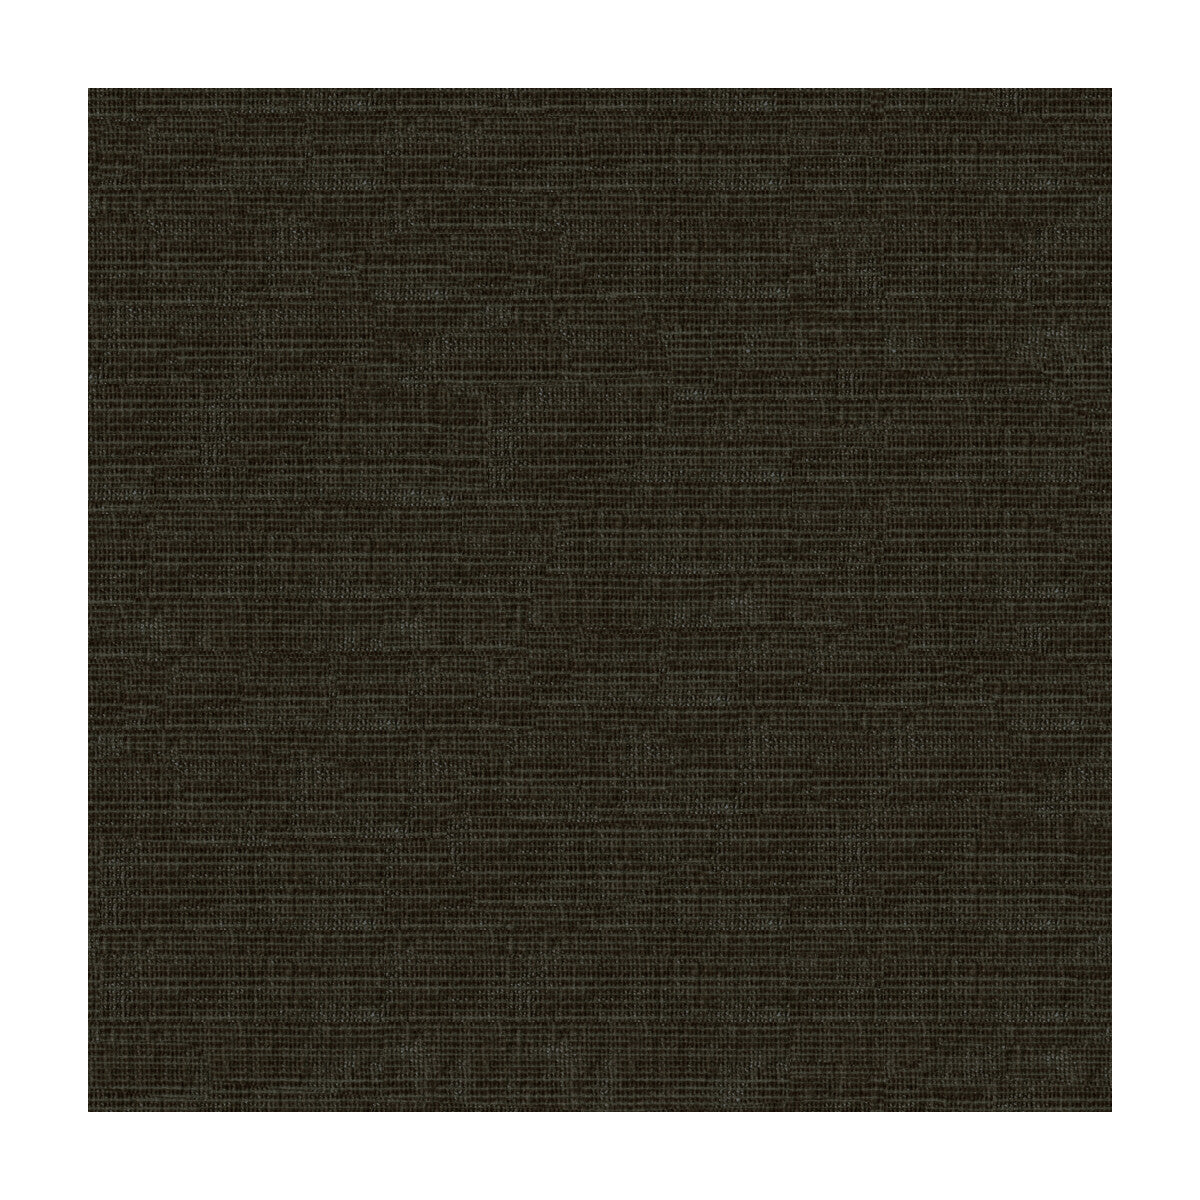 Kravet Smart fabric in 34191-8 color - pattern 34191.8.0 - by Kravet Smart